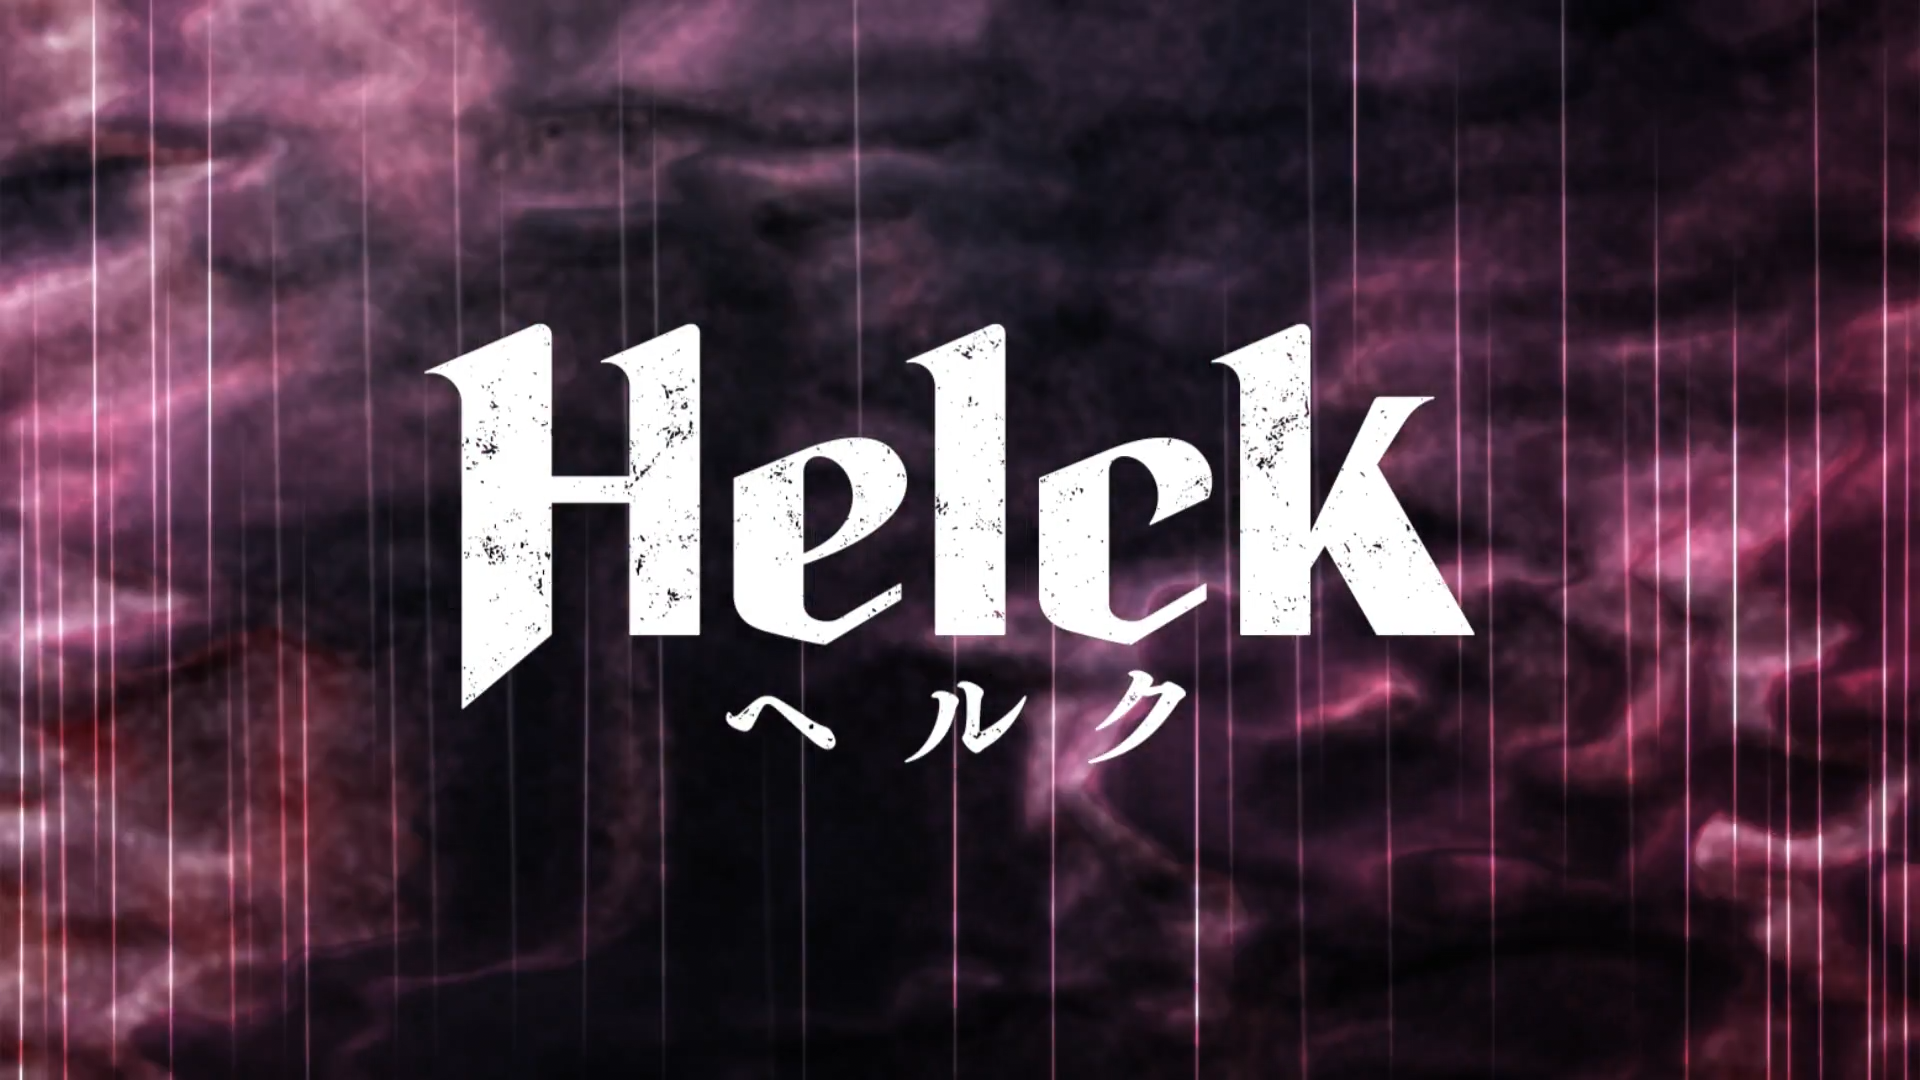 Helck  Хелк - 11  Bg Mtl Sub  - Vbox7